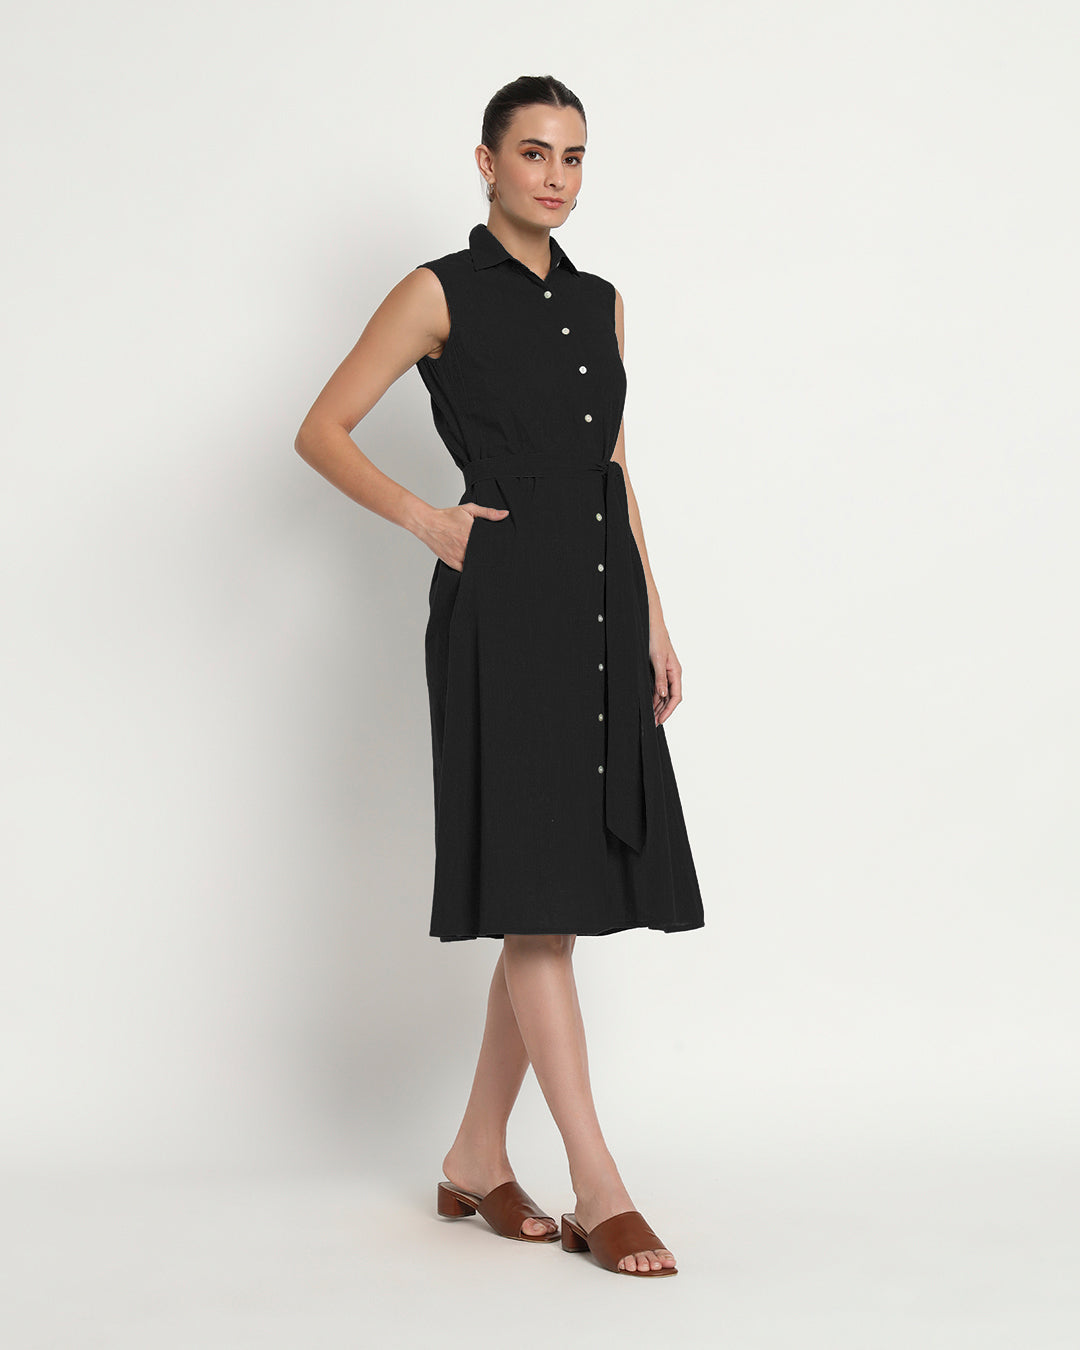 Classic Black Artful A-Line Dress